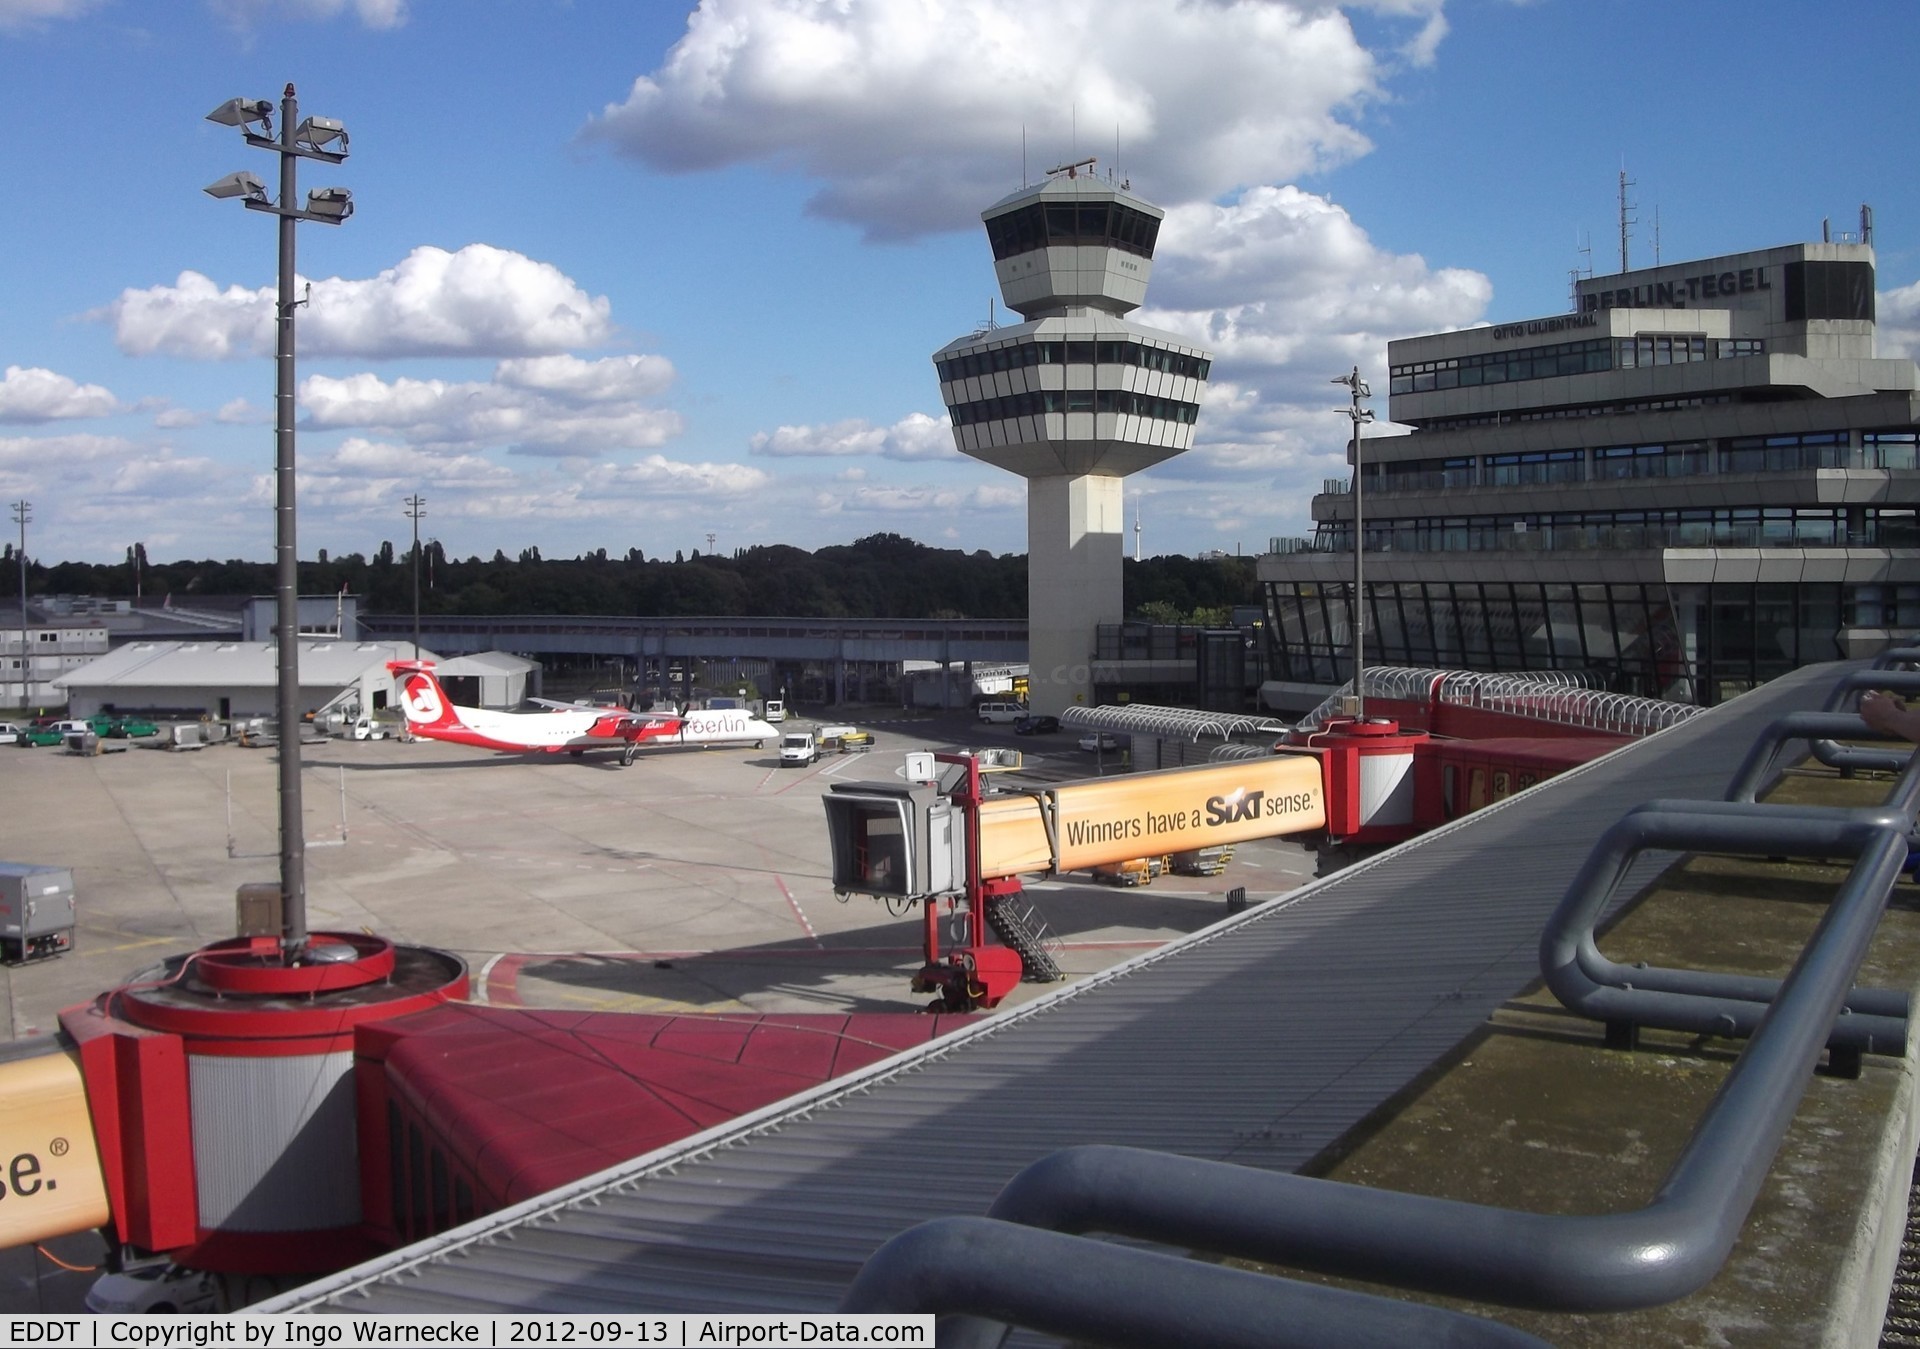 Tegel International Airport (closing in 2011), Berlin Germany (EDDT) - looking towards the tower from the viewing platform at Berlin-Tegel